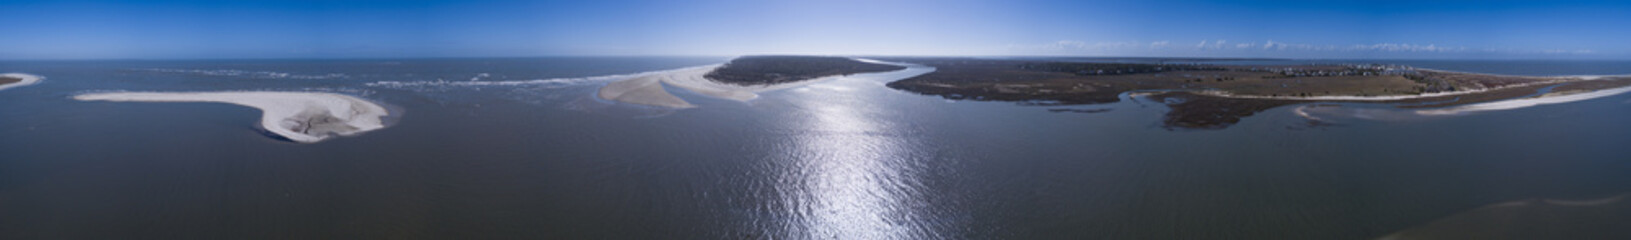 High aerial 360 degree seamless panorama of islands and ocean in South Carolina.